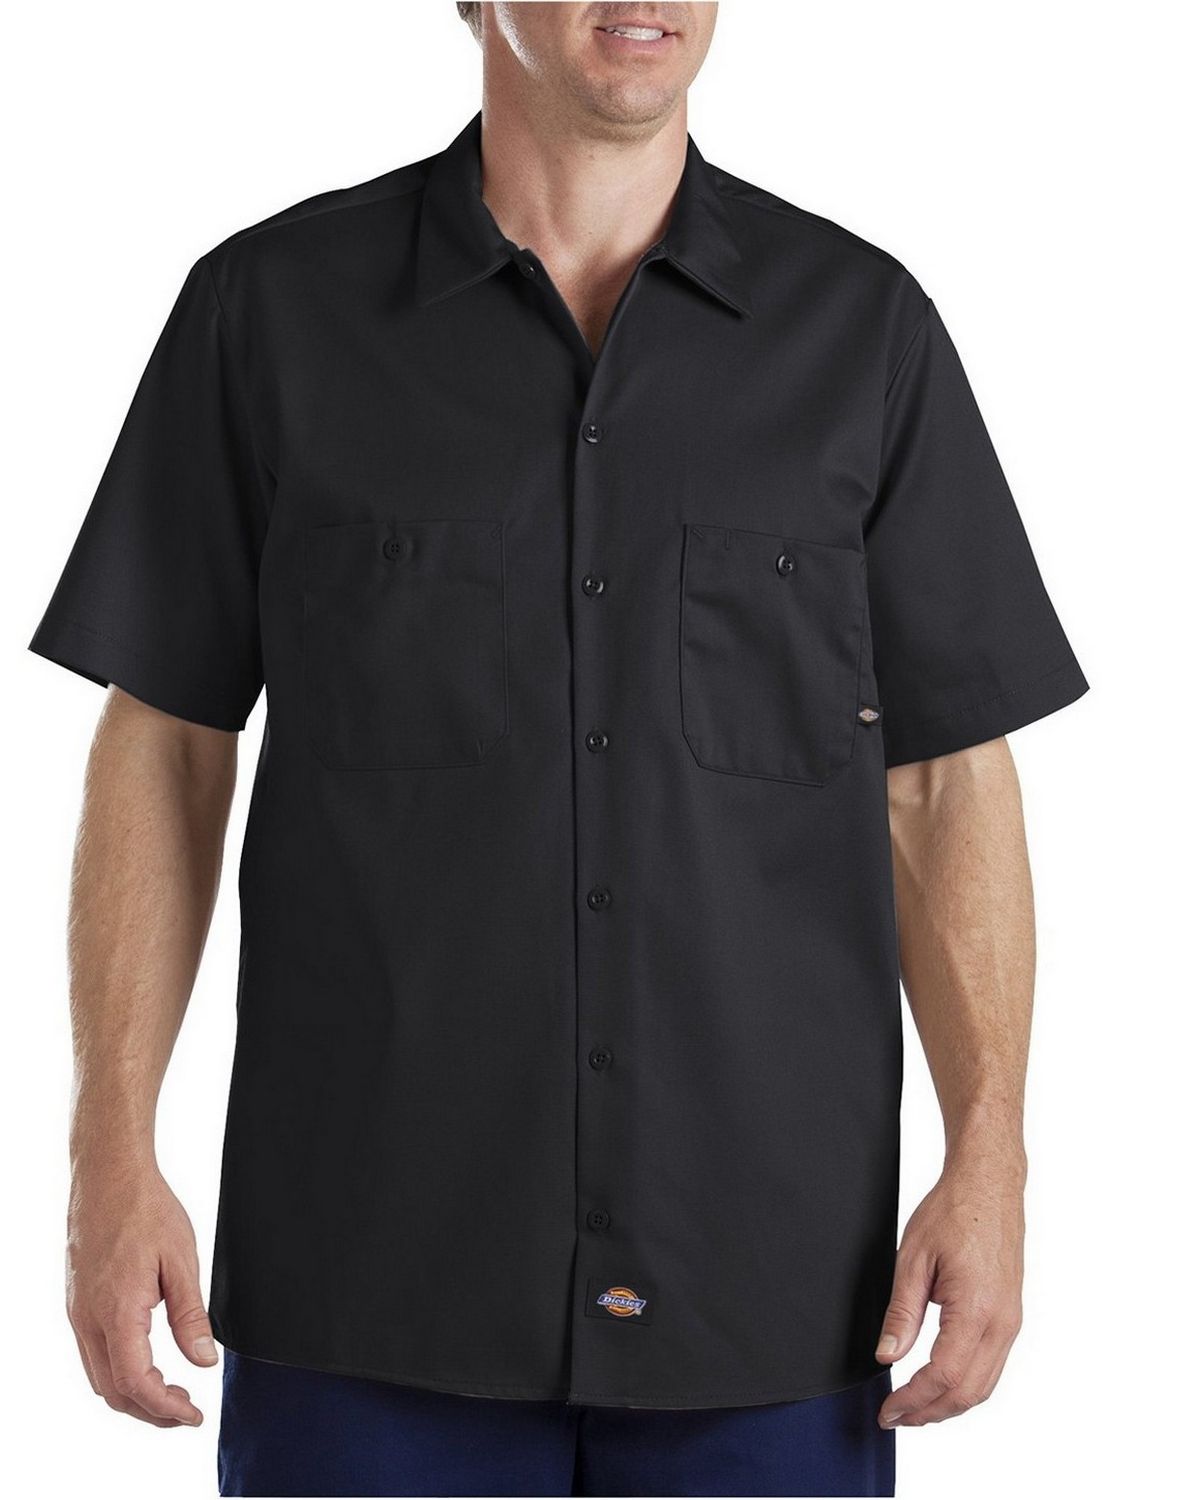 Dickies LS307 Industrial Short-Sleeve Cotton Work Shirt - ApparelnBags.com